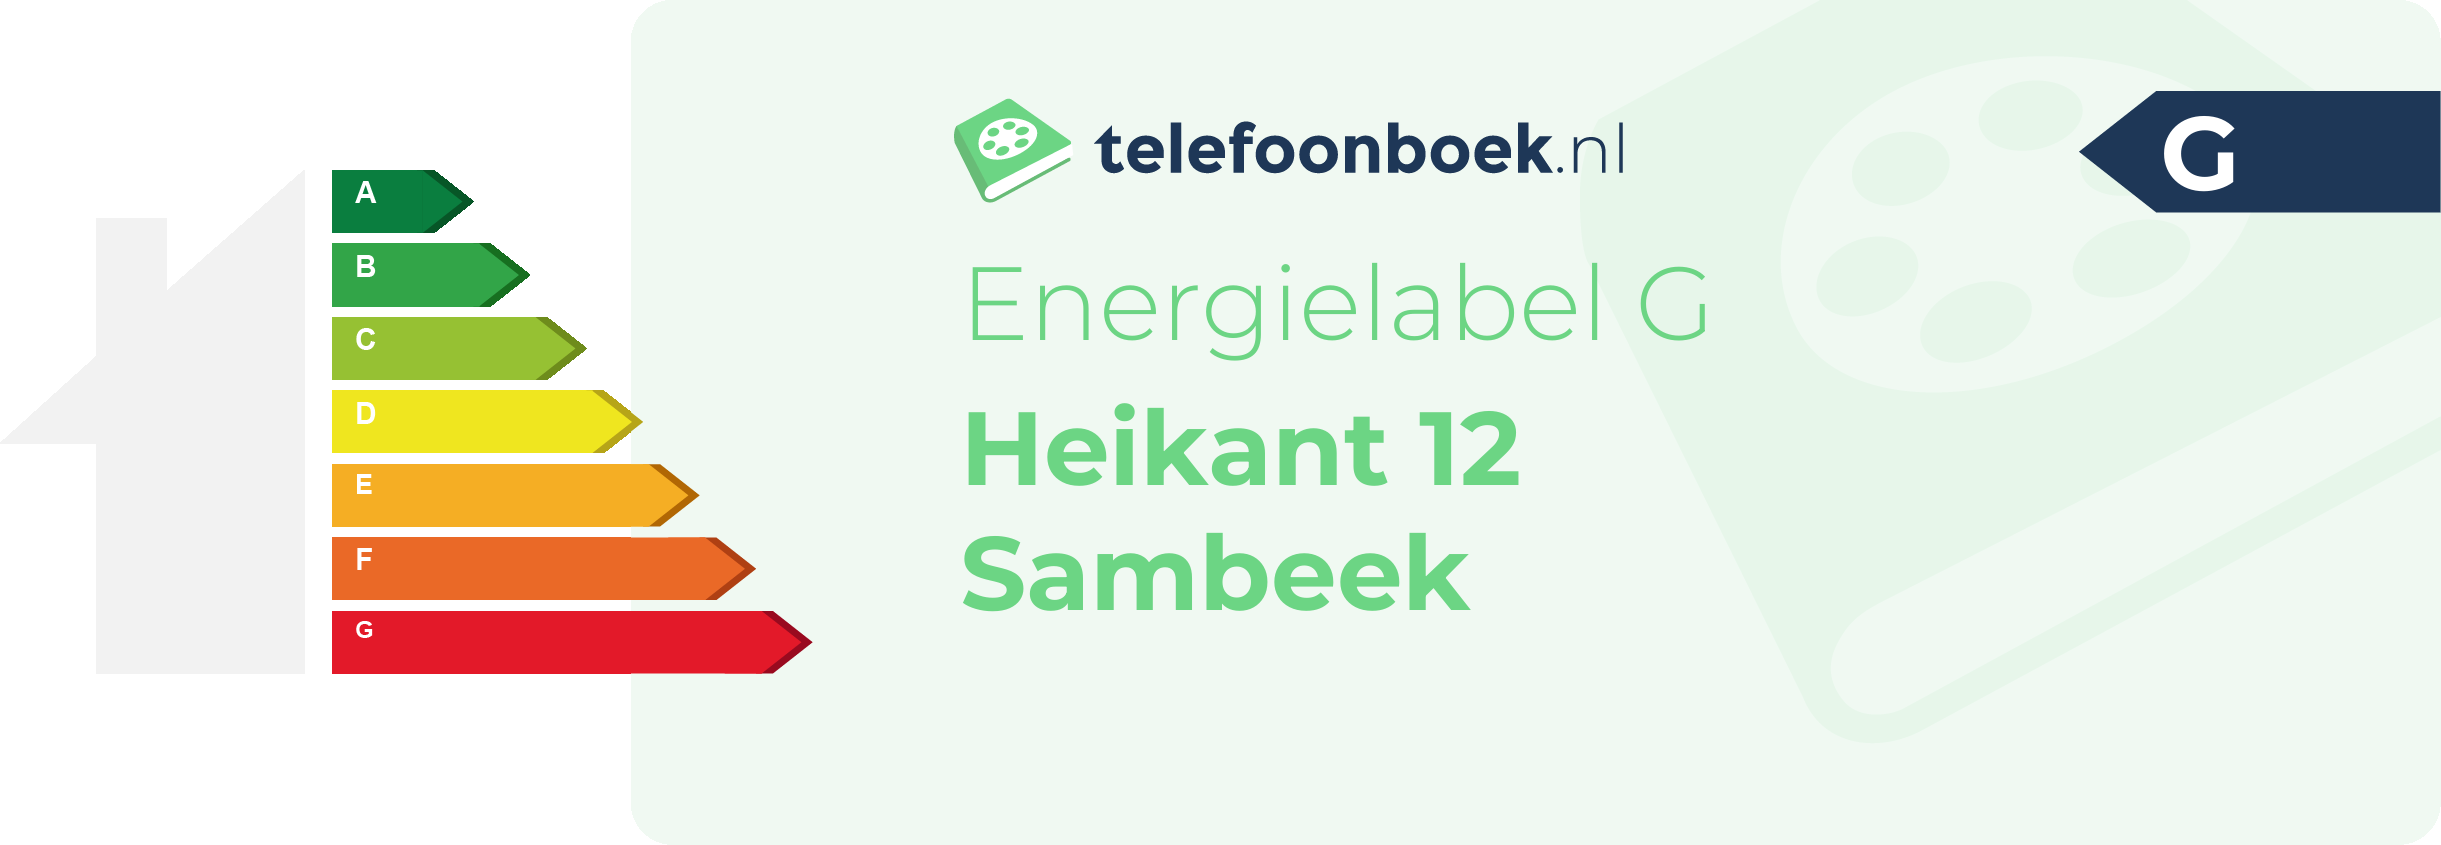 Energielabel Heikant 12 Sambeek